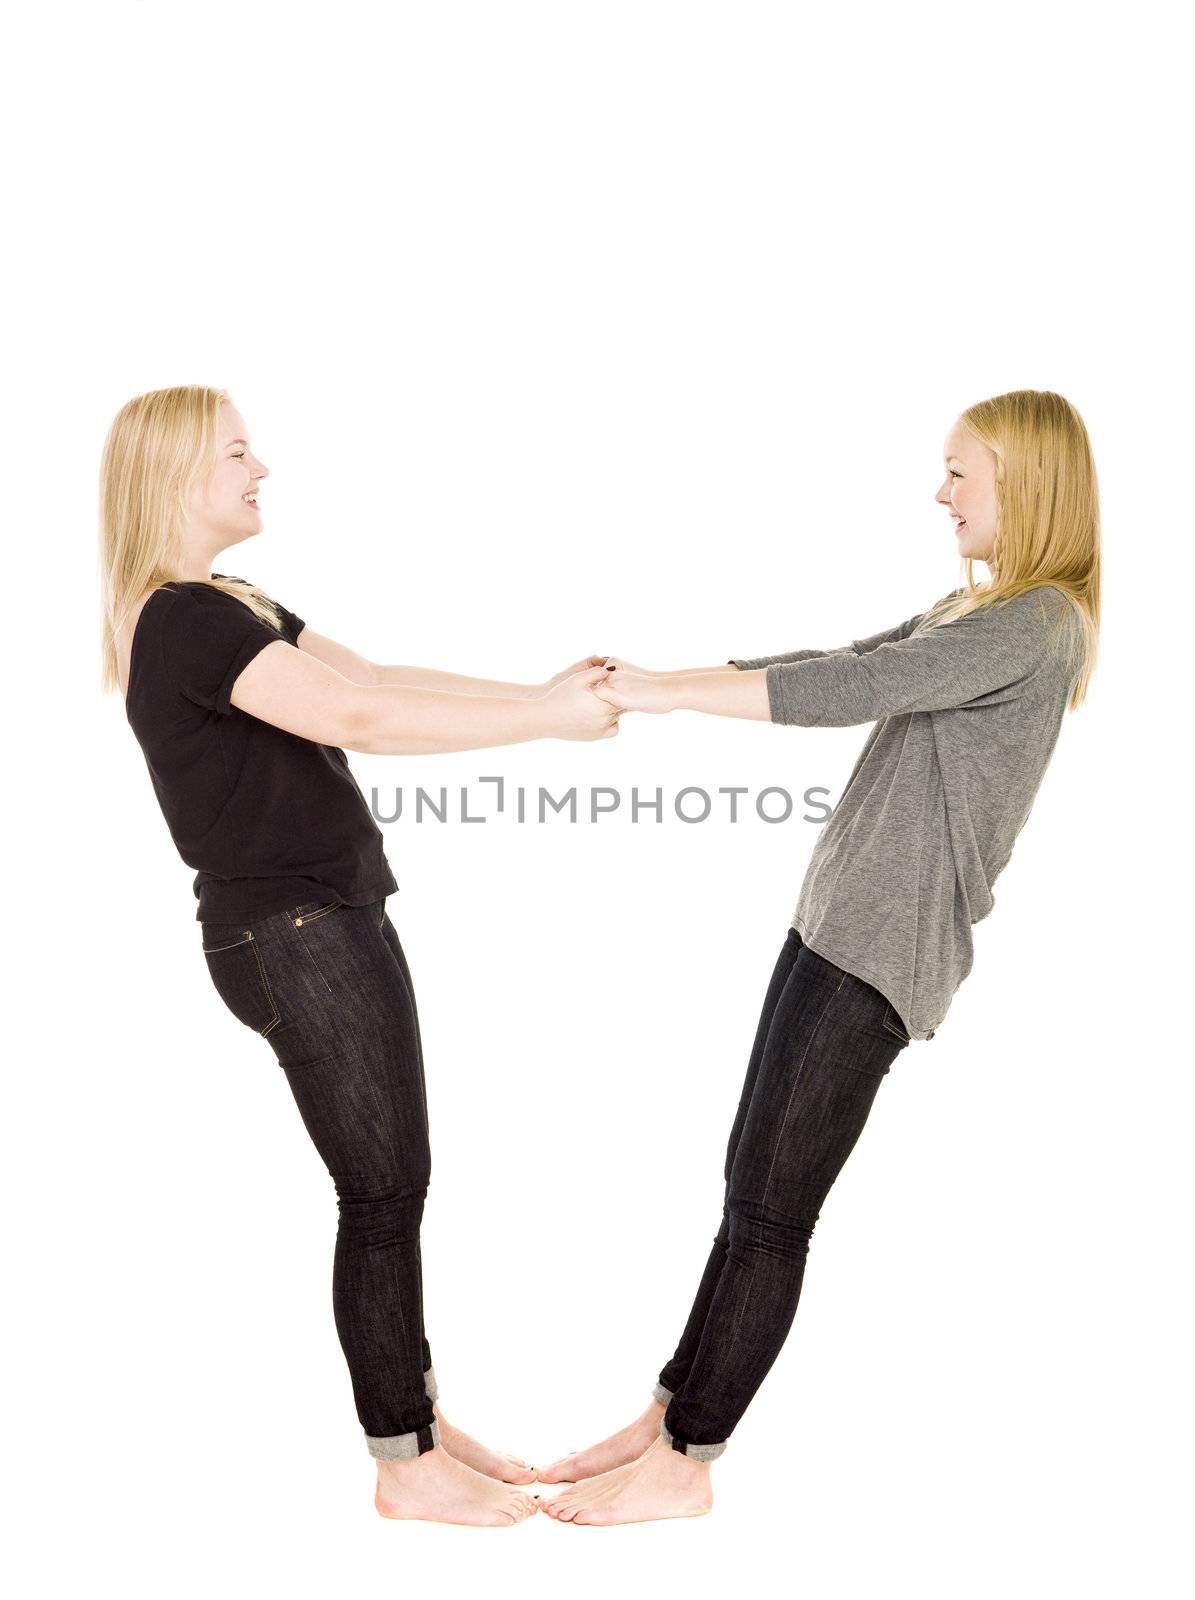 Girls holding hands by gemenacom